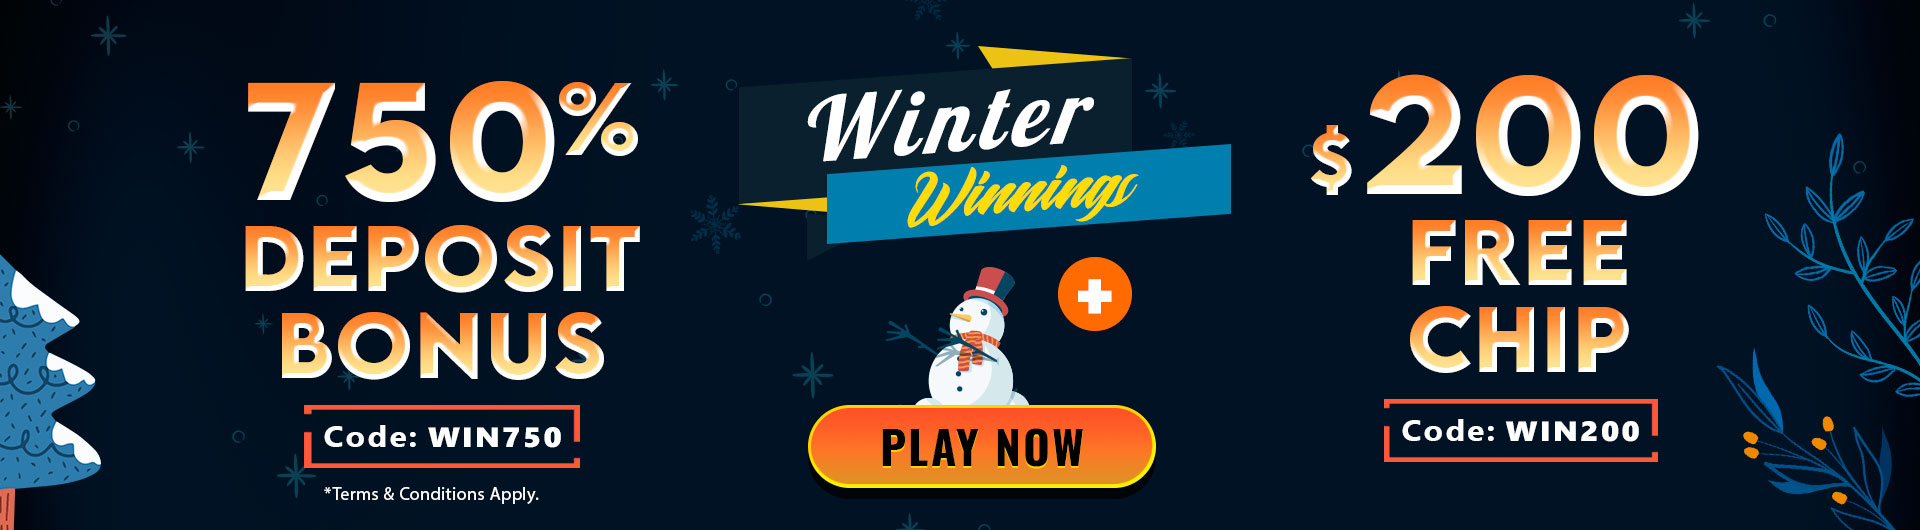 S7_winter winning